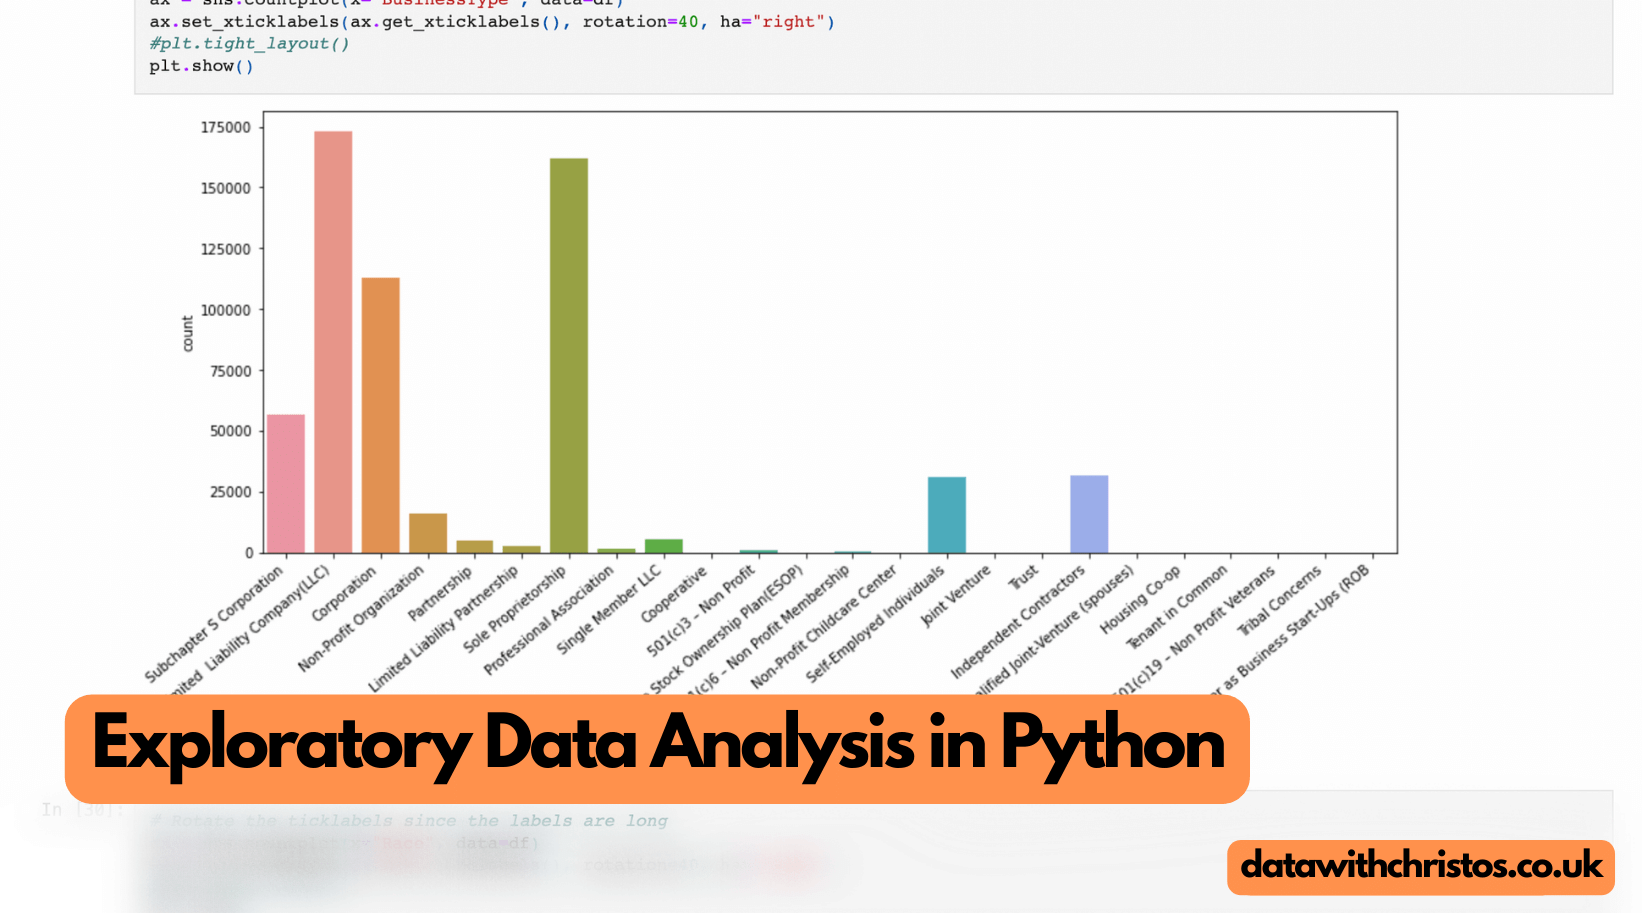 Exploratory Data Analysis in Python